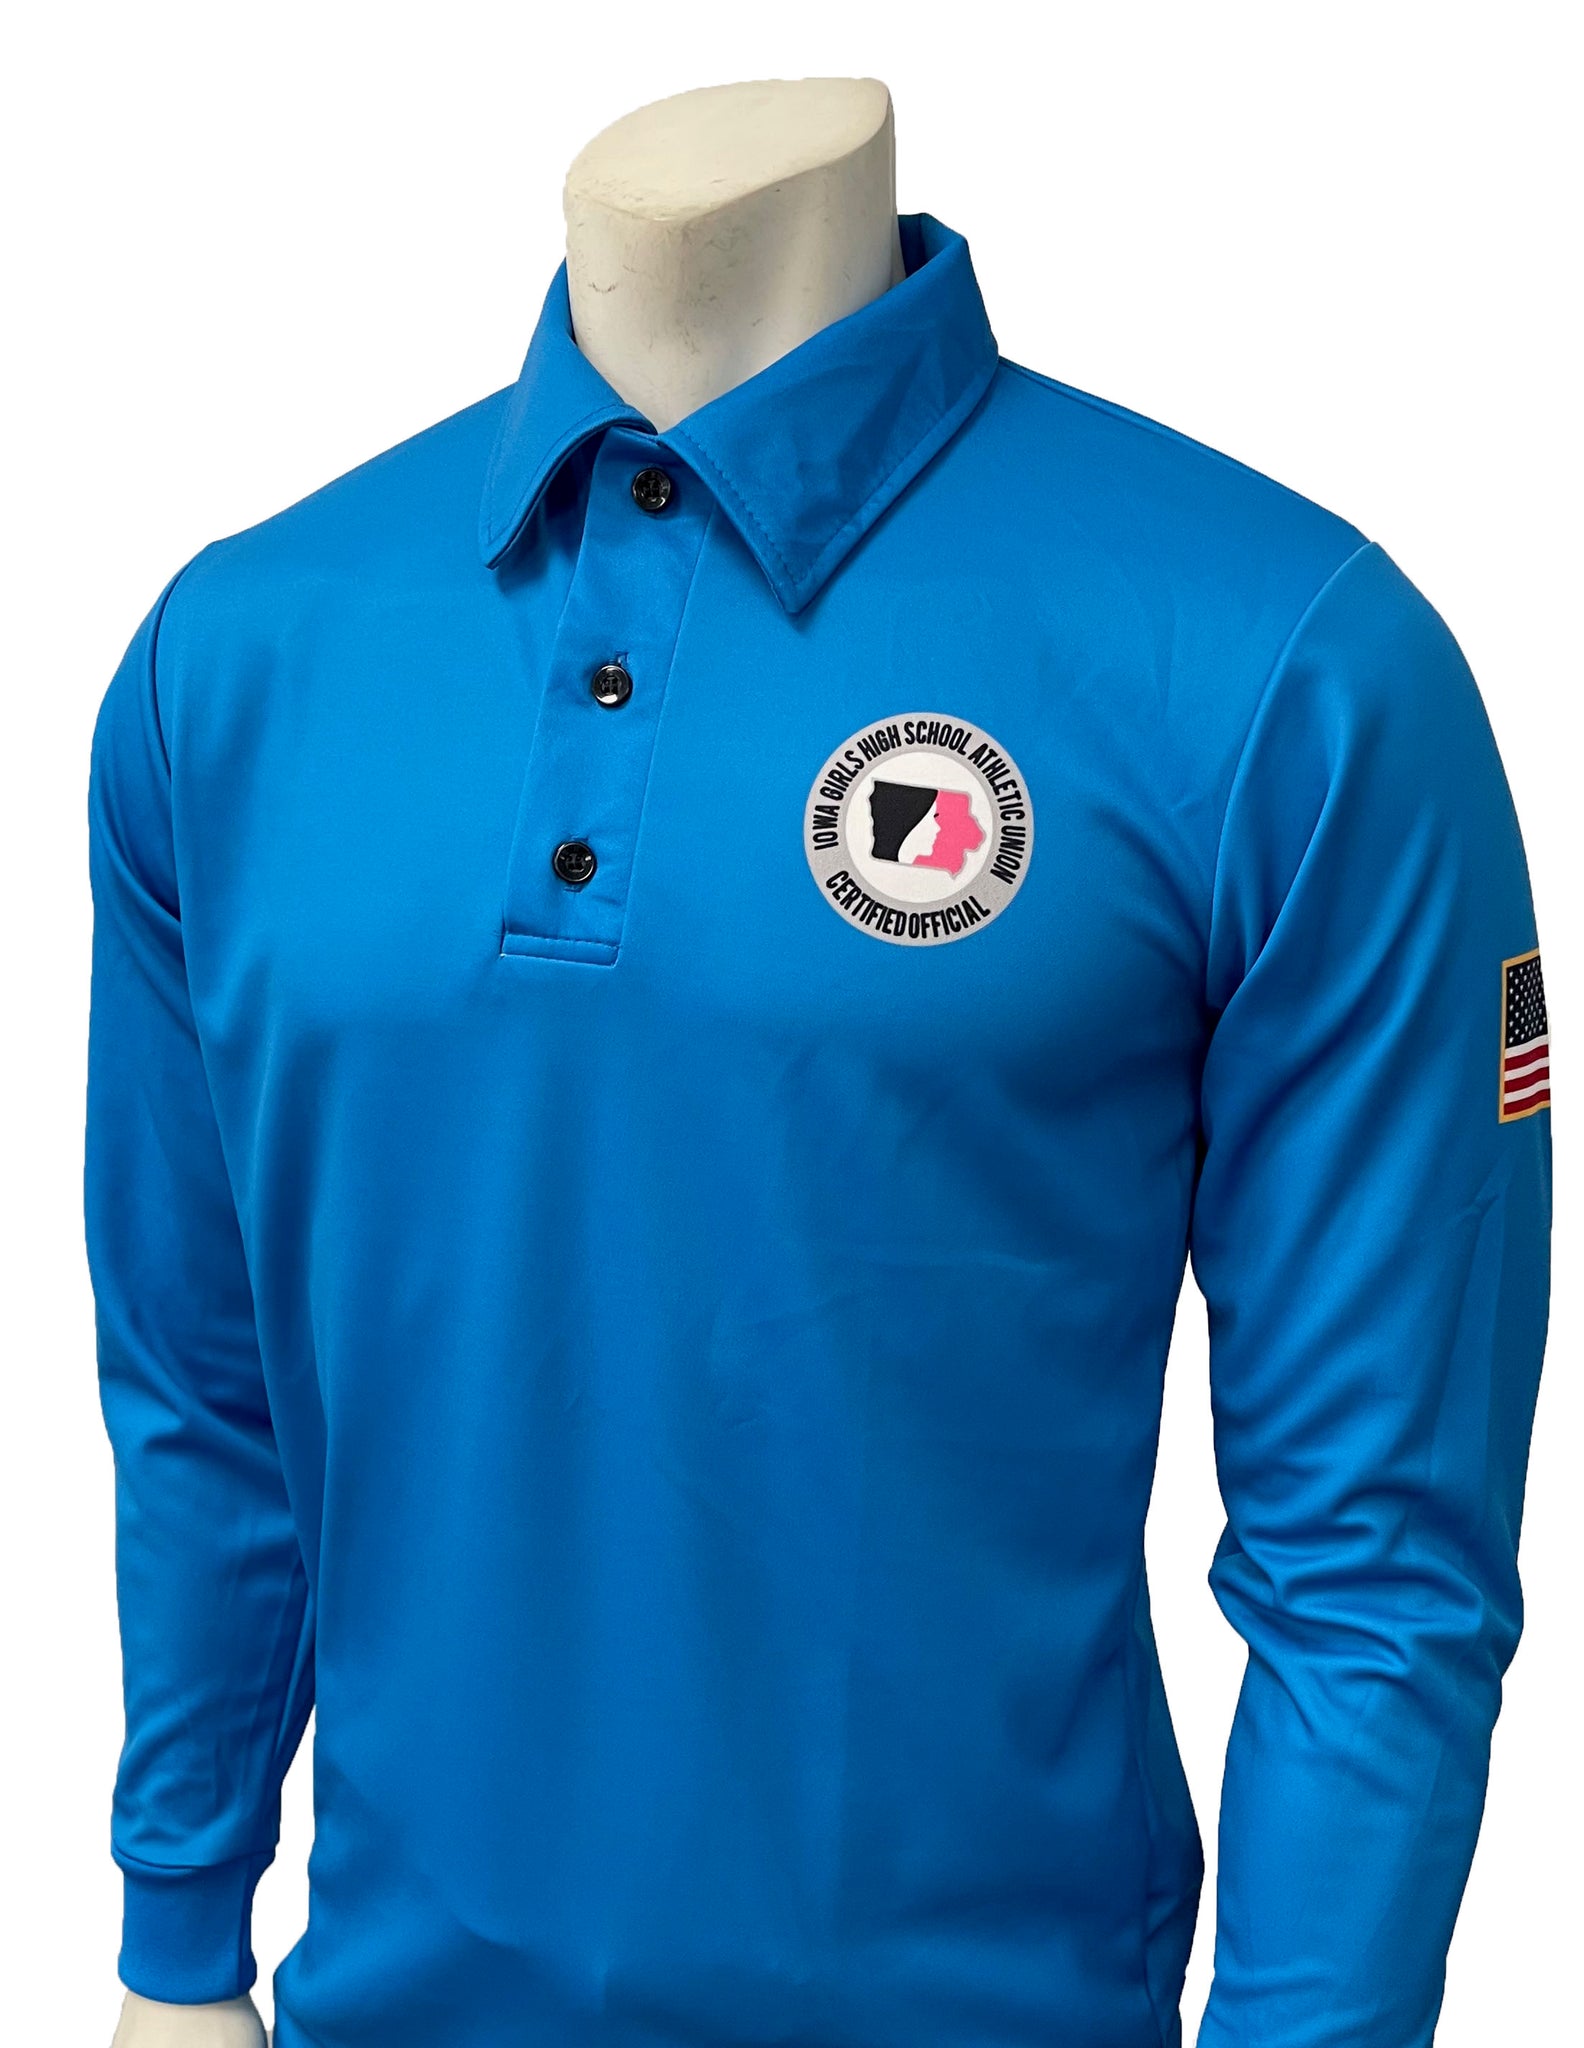 USA401IGU-BB - Smitty "Made in USA" - IGHSAU Men's Long Sleeve "BRIGHT BLUE" Volleyball Shirt